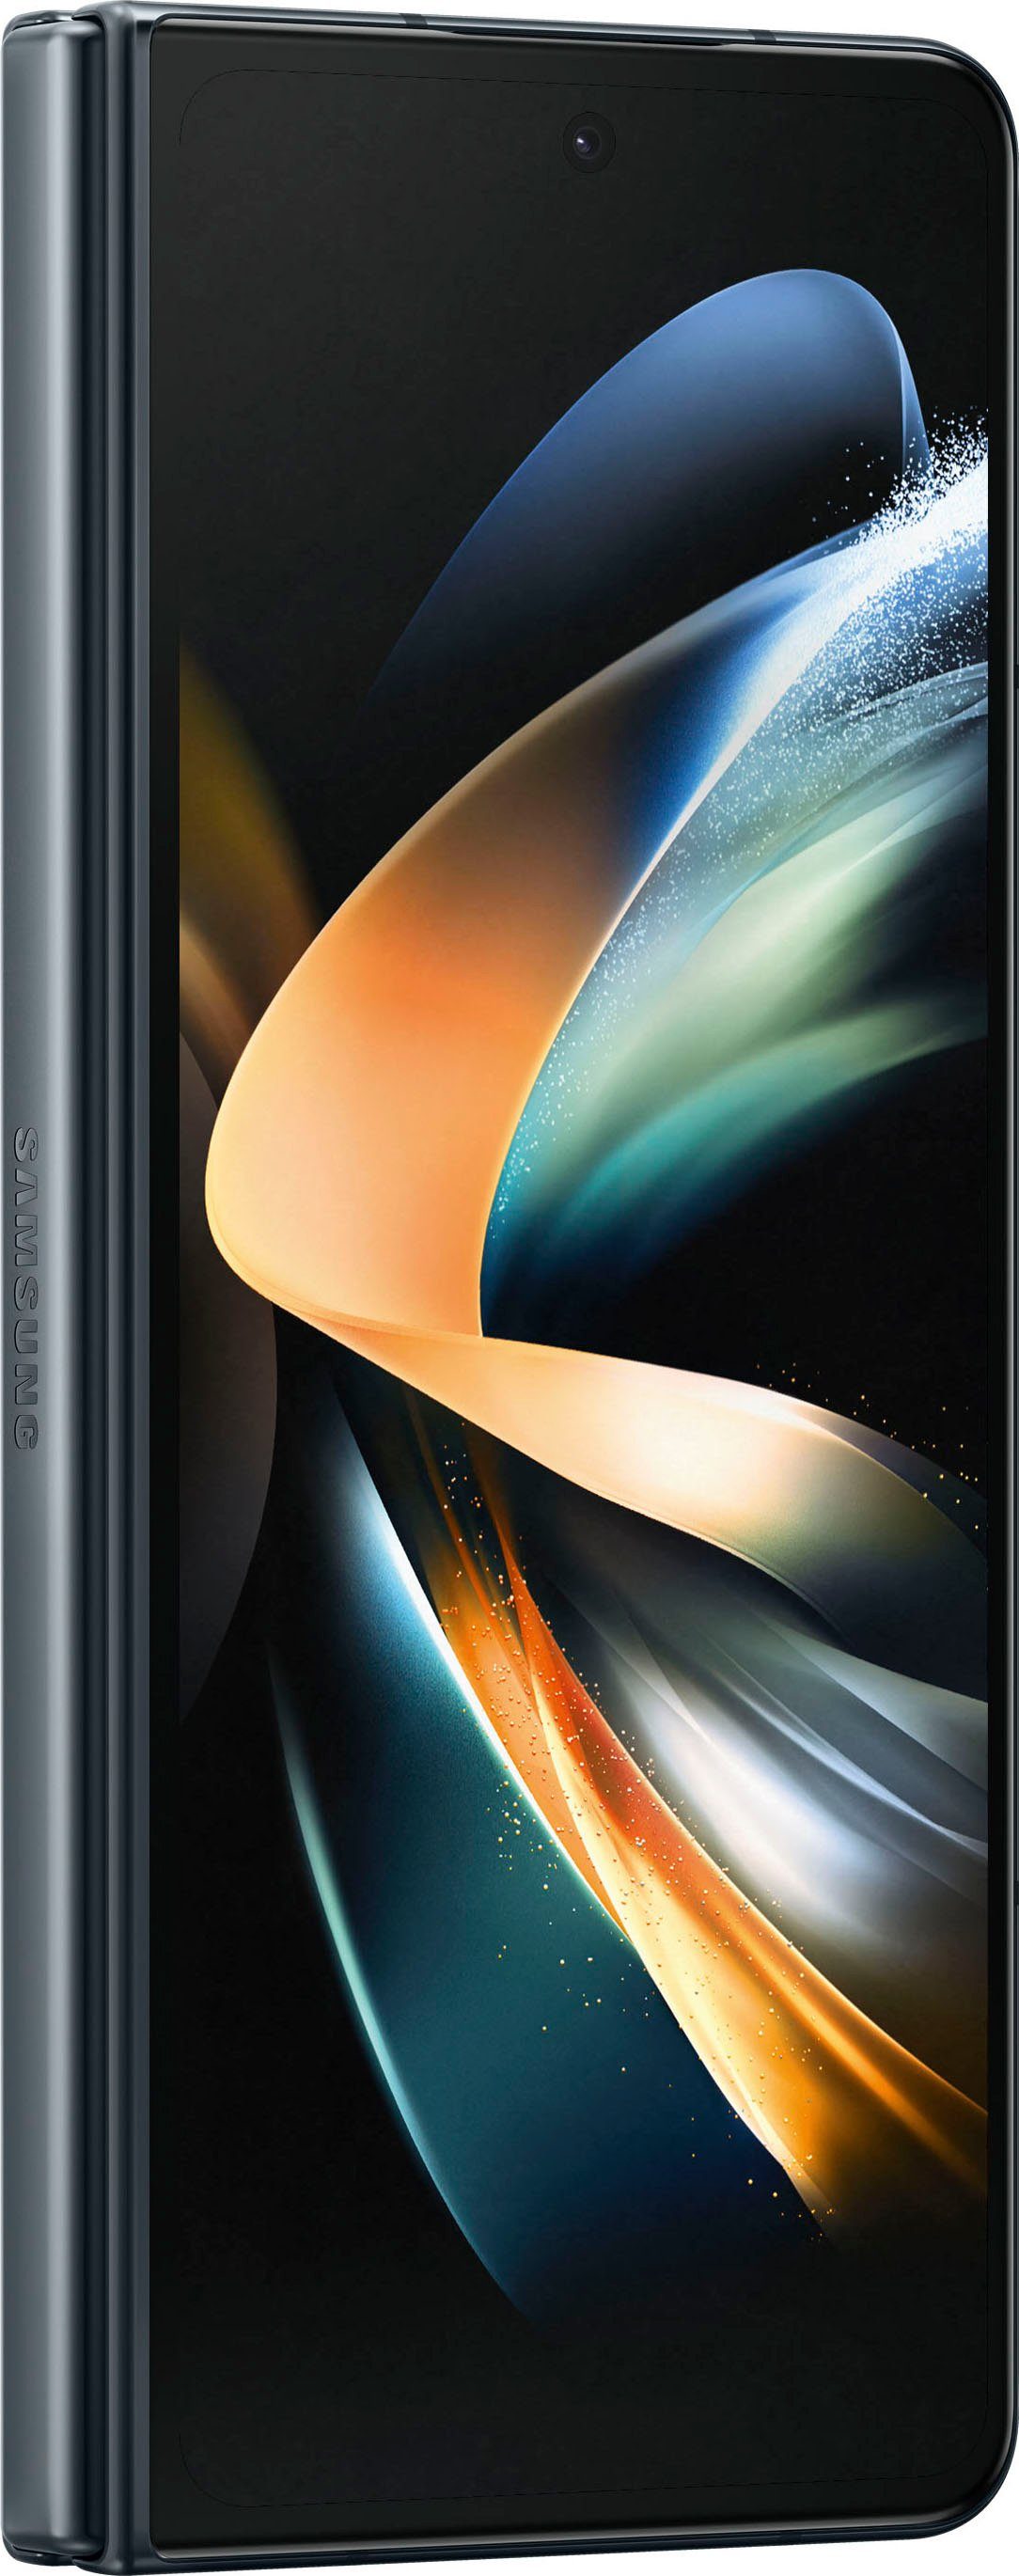 Graygreen Galaxy 512 cm/7,6 Fold4 50 Samsung Smartphone Kamera) (19,21 Speicherplatz, MP GB Zoll, Z